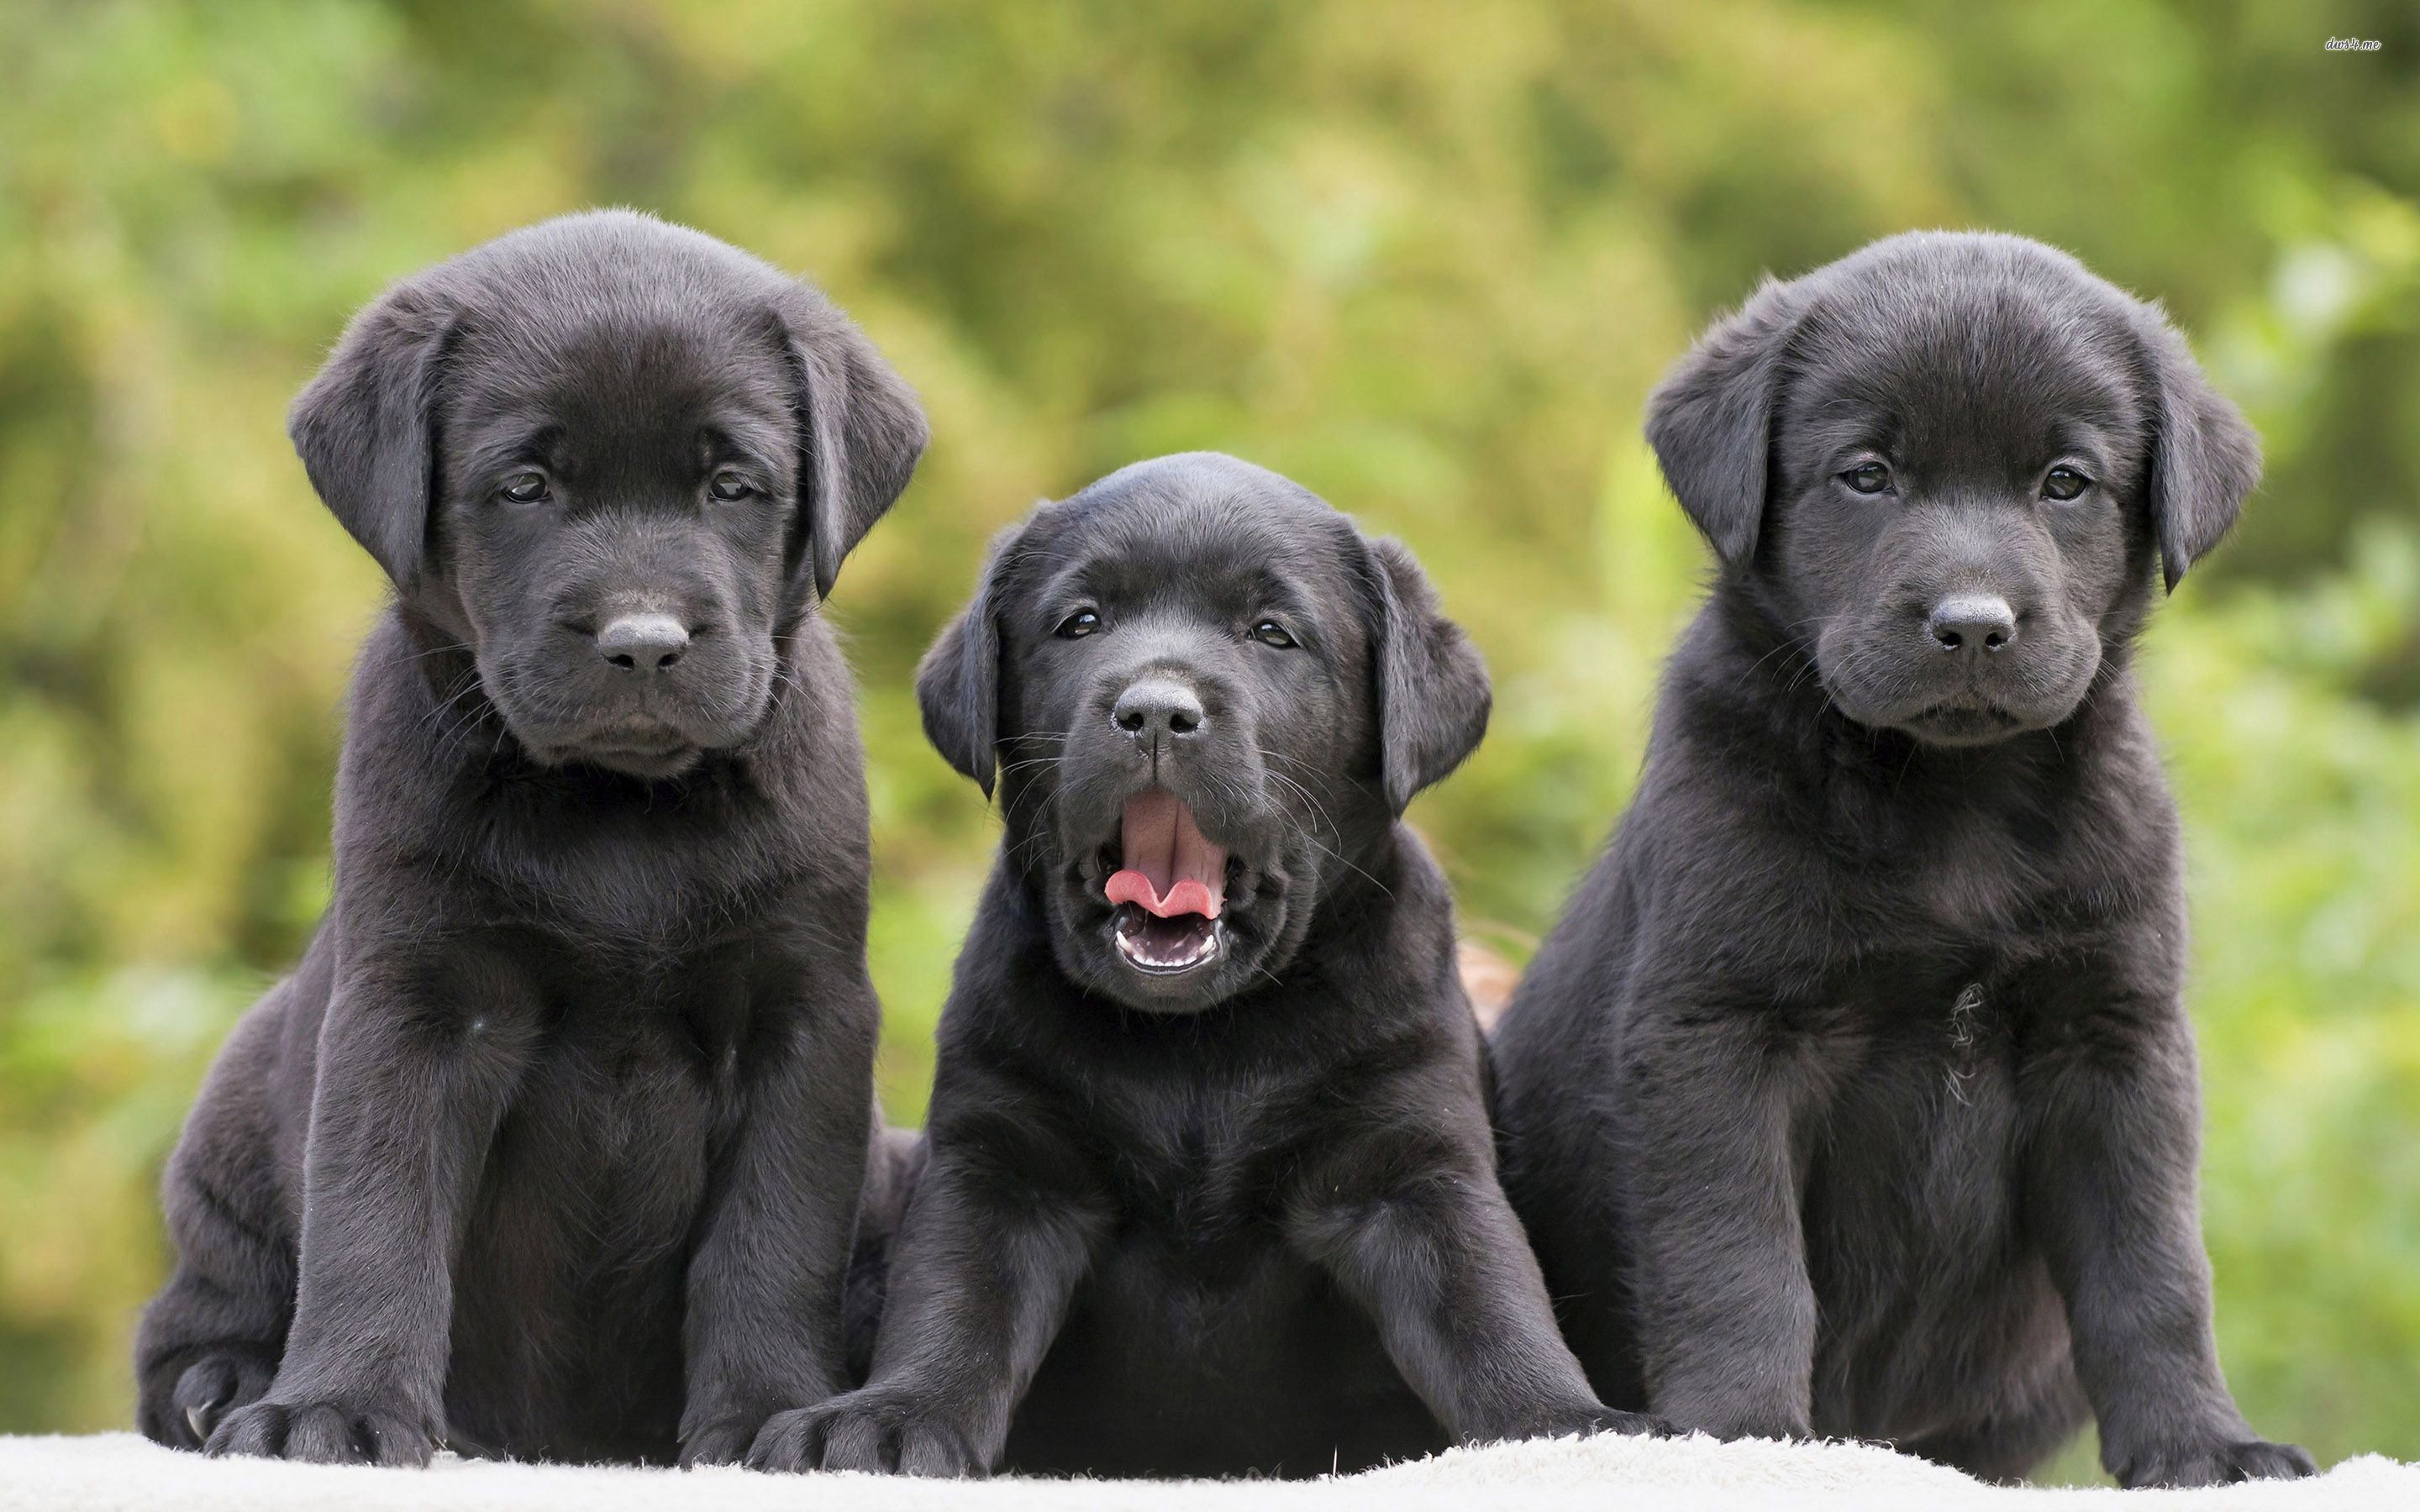 Black Labrador Retriver puppies wallpaper - Animal wallpapers